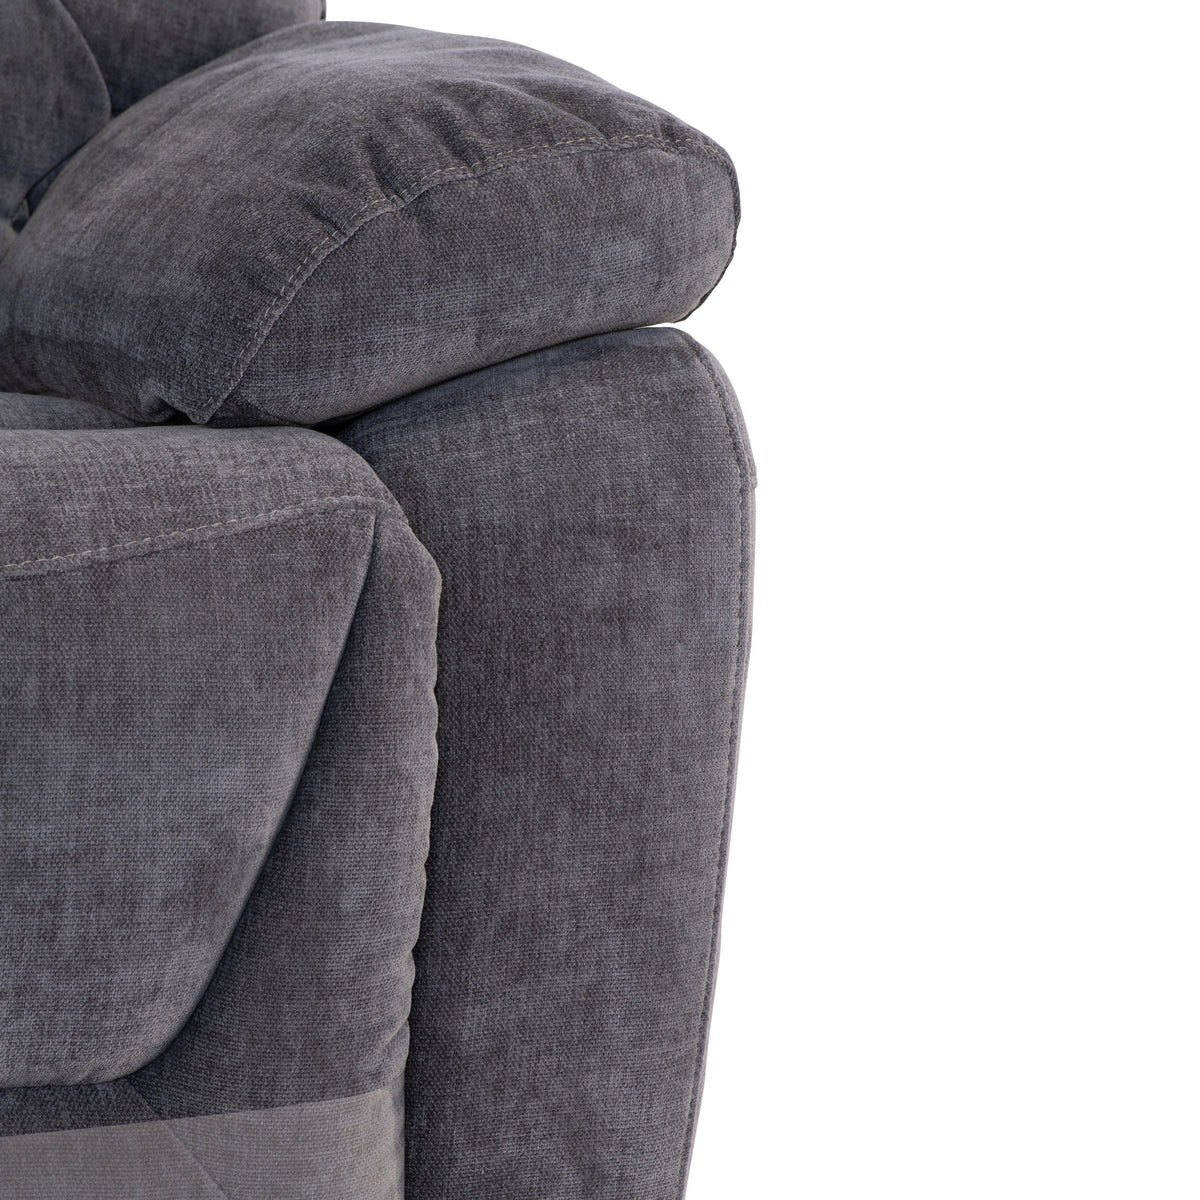 Barlow Fabric Electric Reclining 2 Seater Sofa